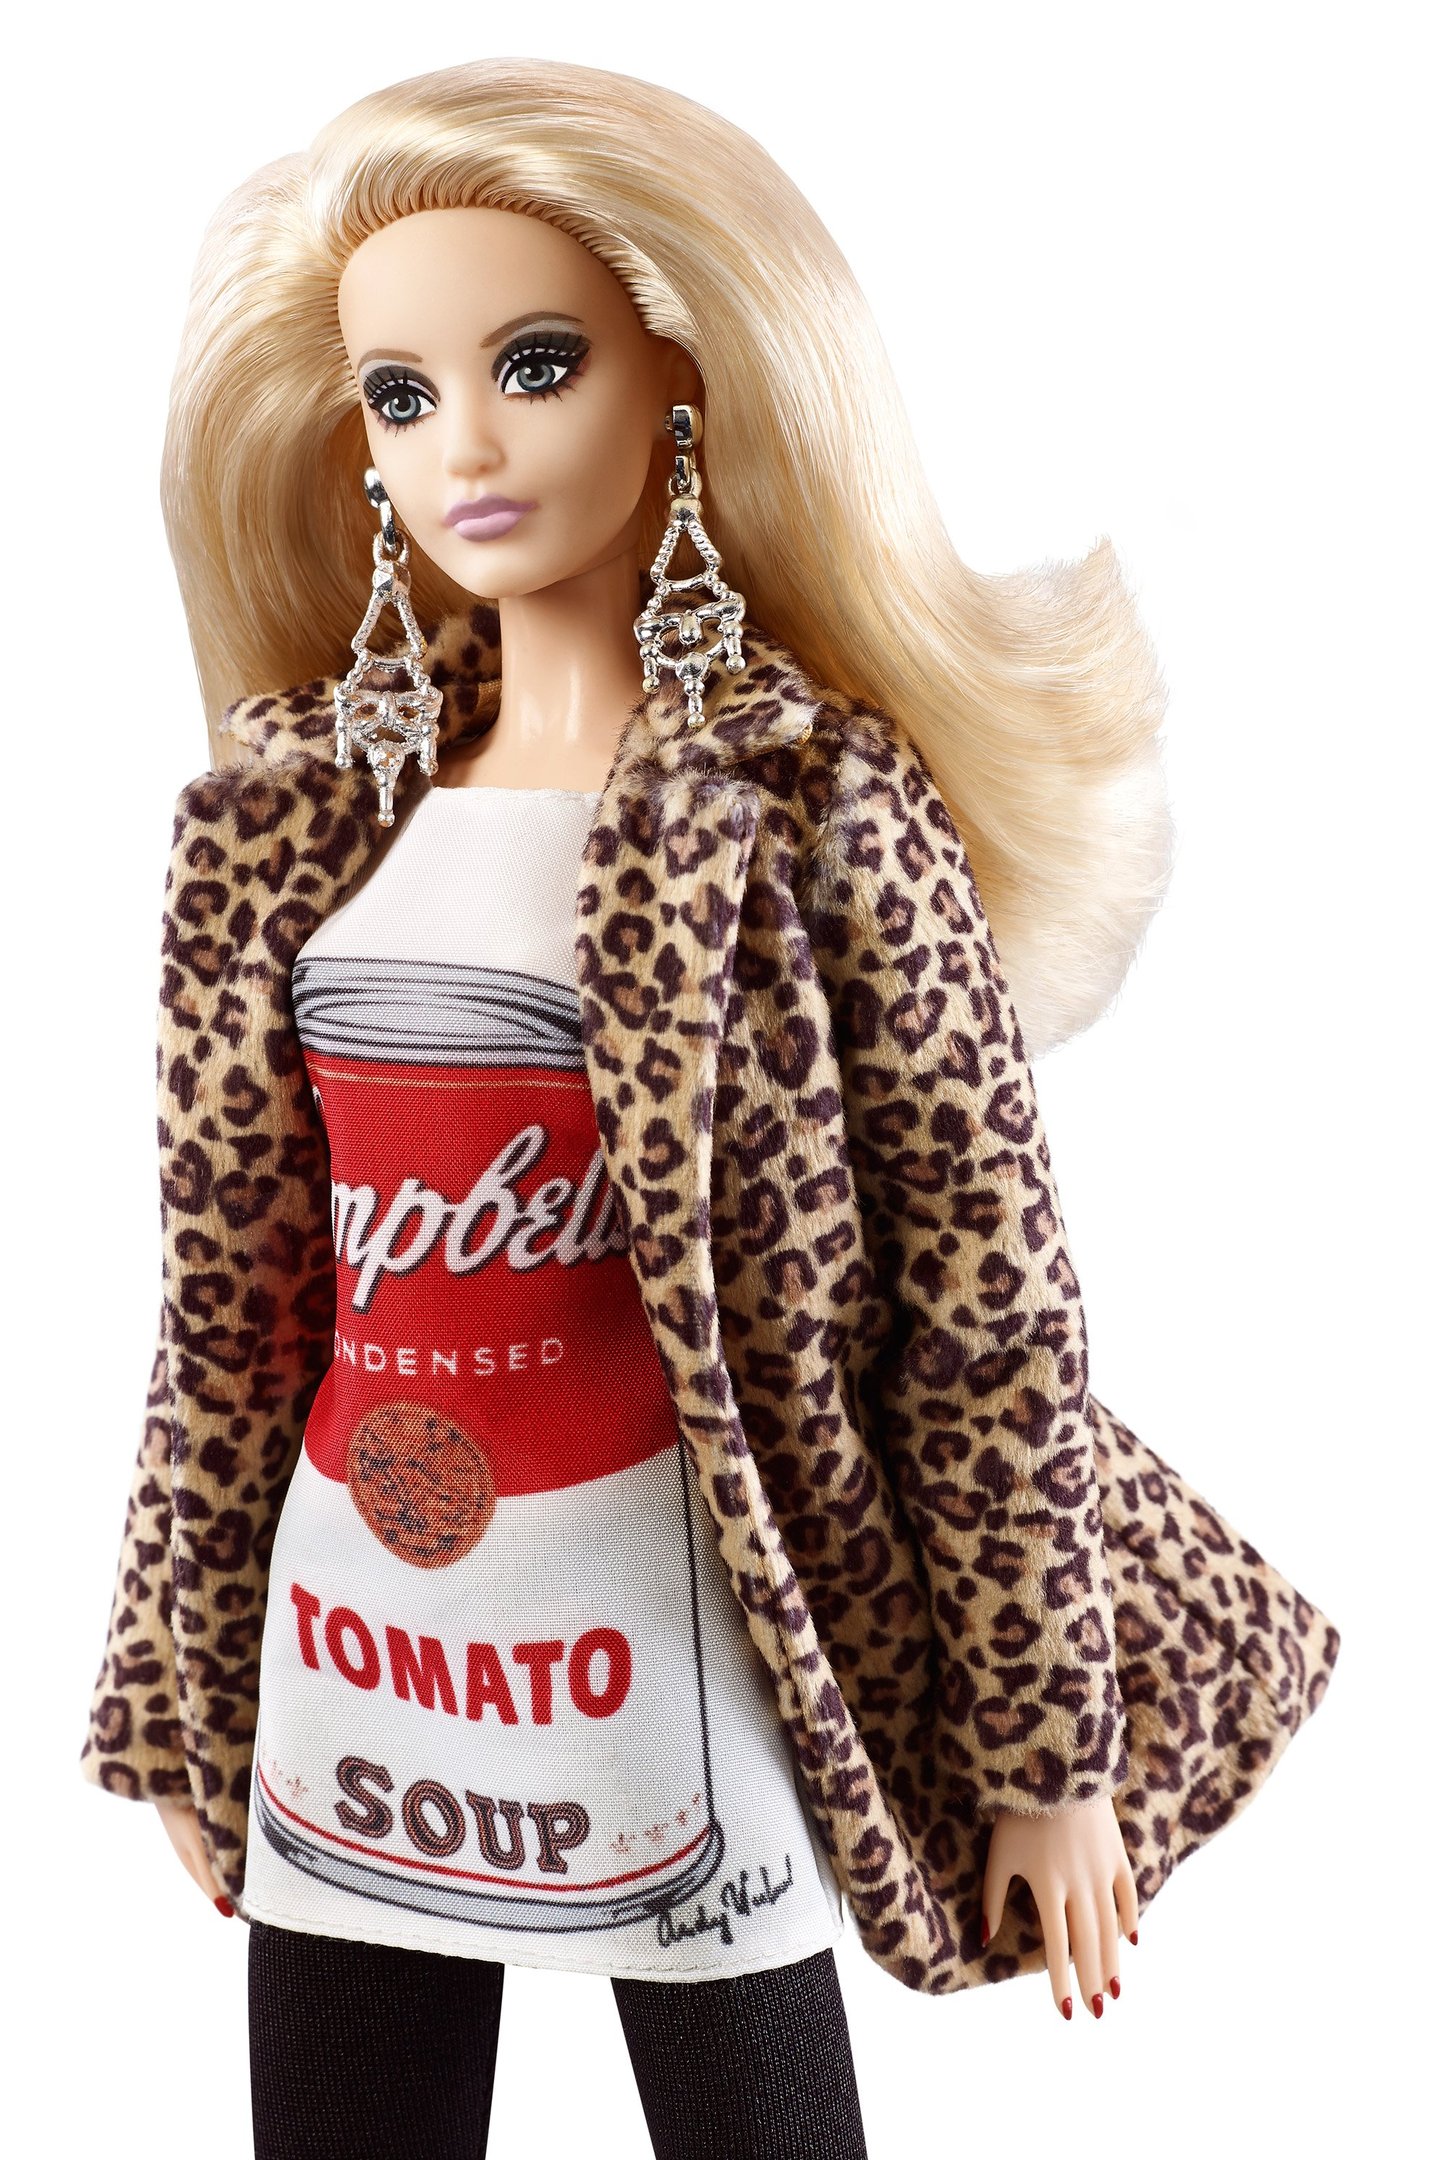 Barbie Warhol #2